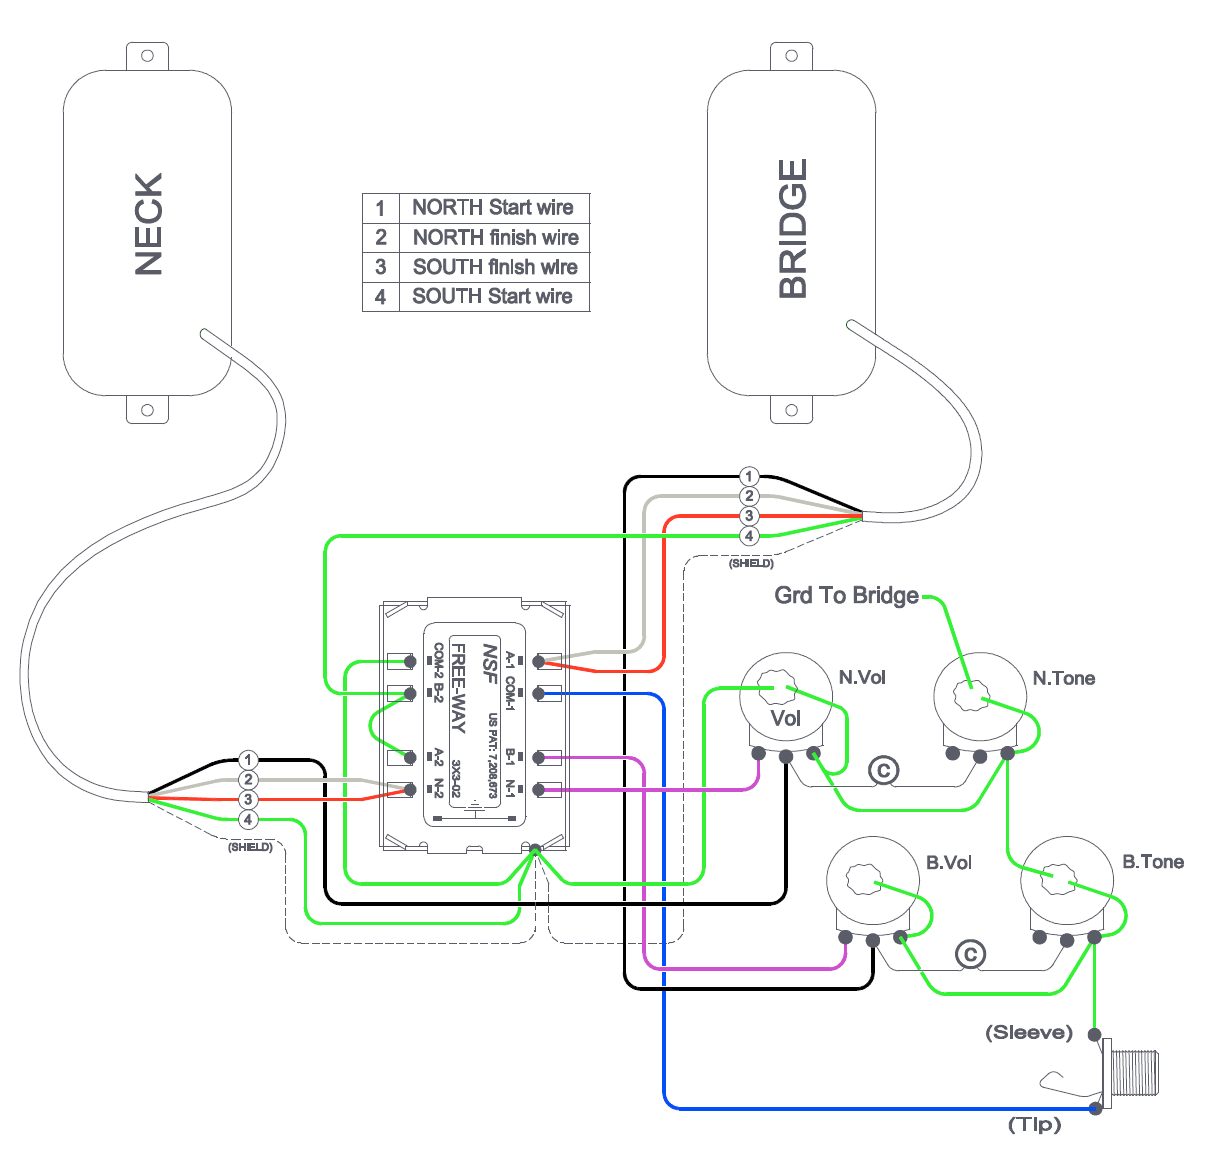 gfs kwikplug wiring diagram